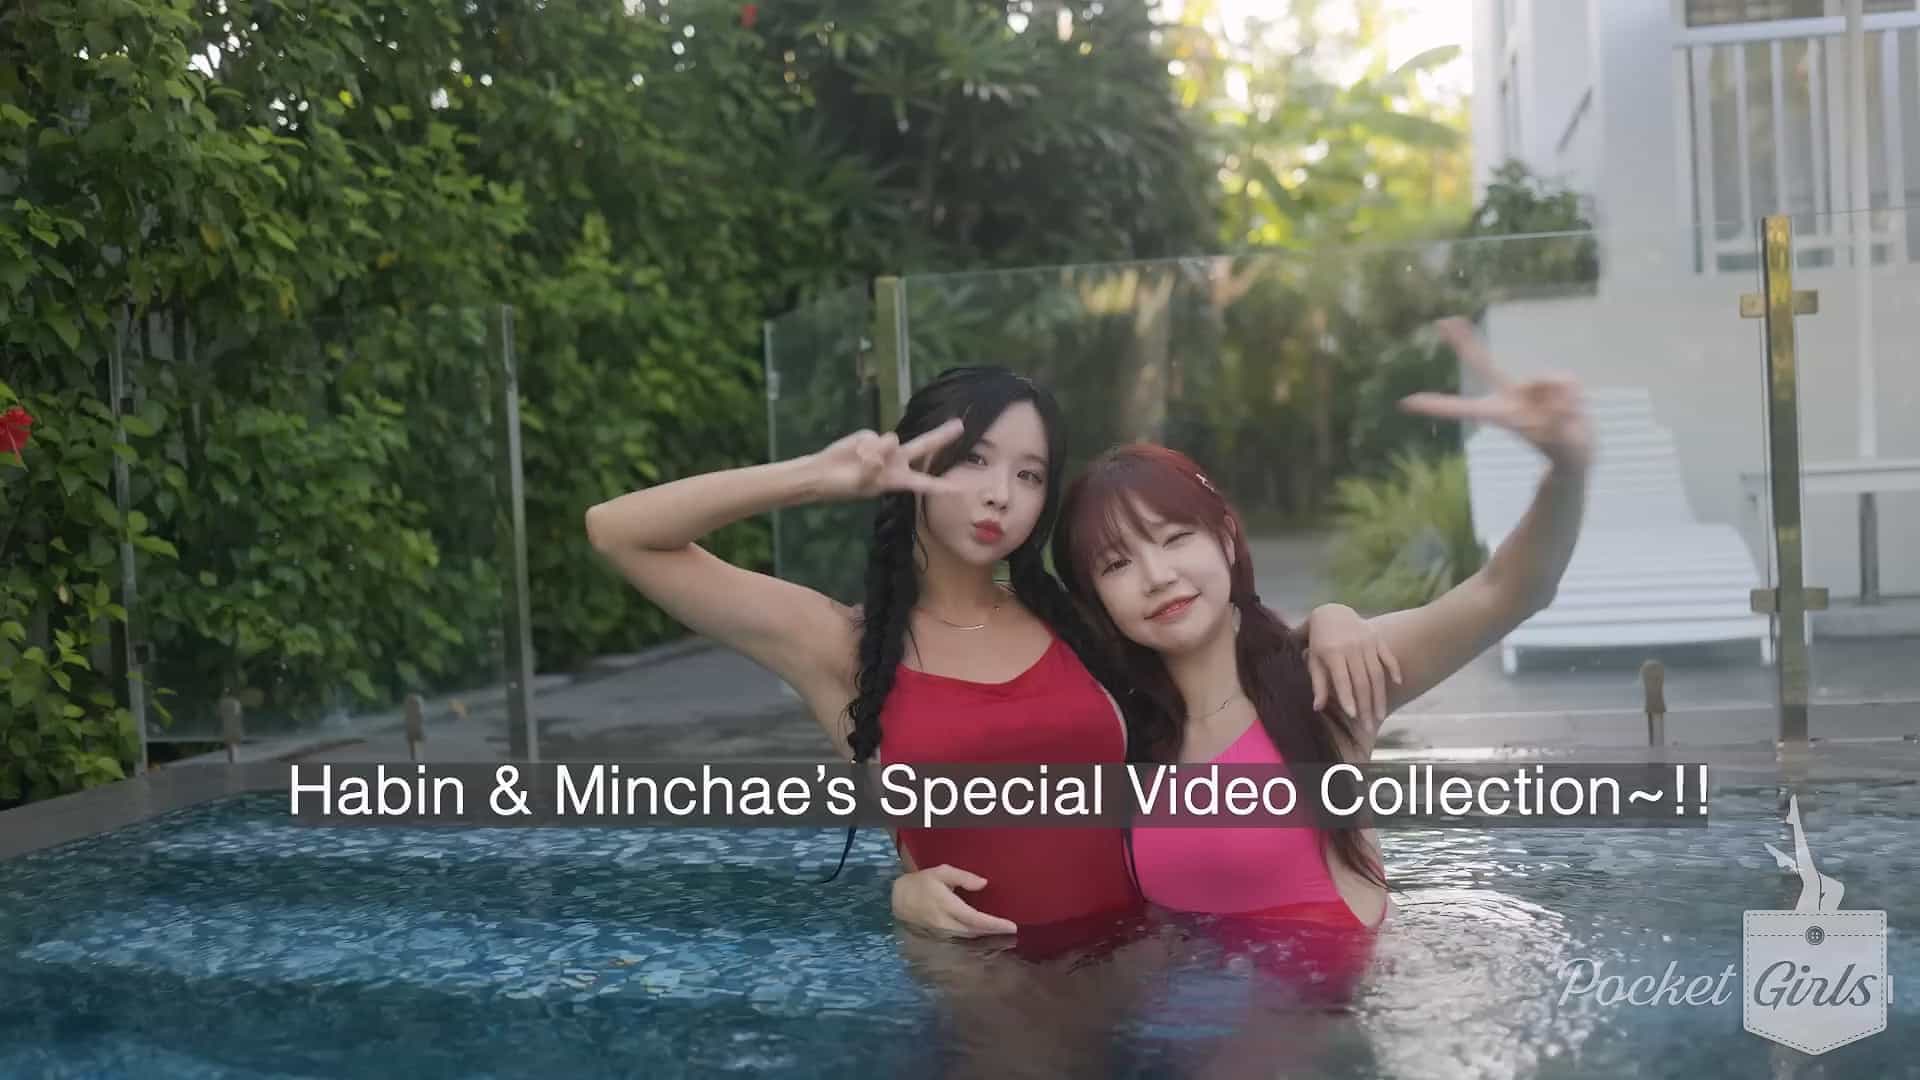 Habin & Minchae’s Special Video Collection, 하빈 & 민채, 스페셜 비디오 컬렉션 발매!, Pocket Girls, 포켓걸스 – #00335插图1